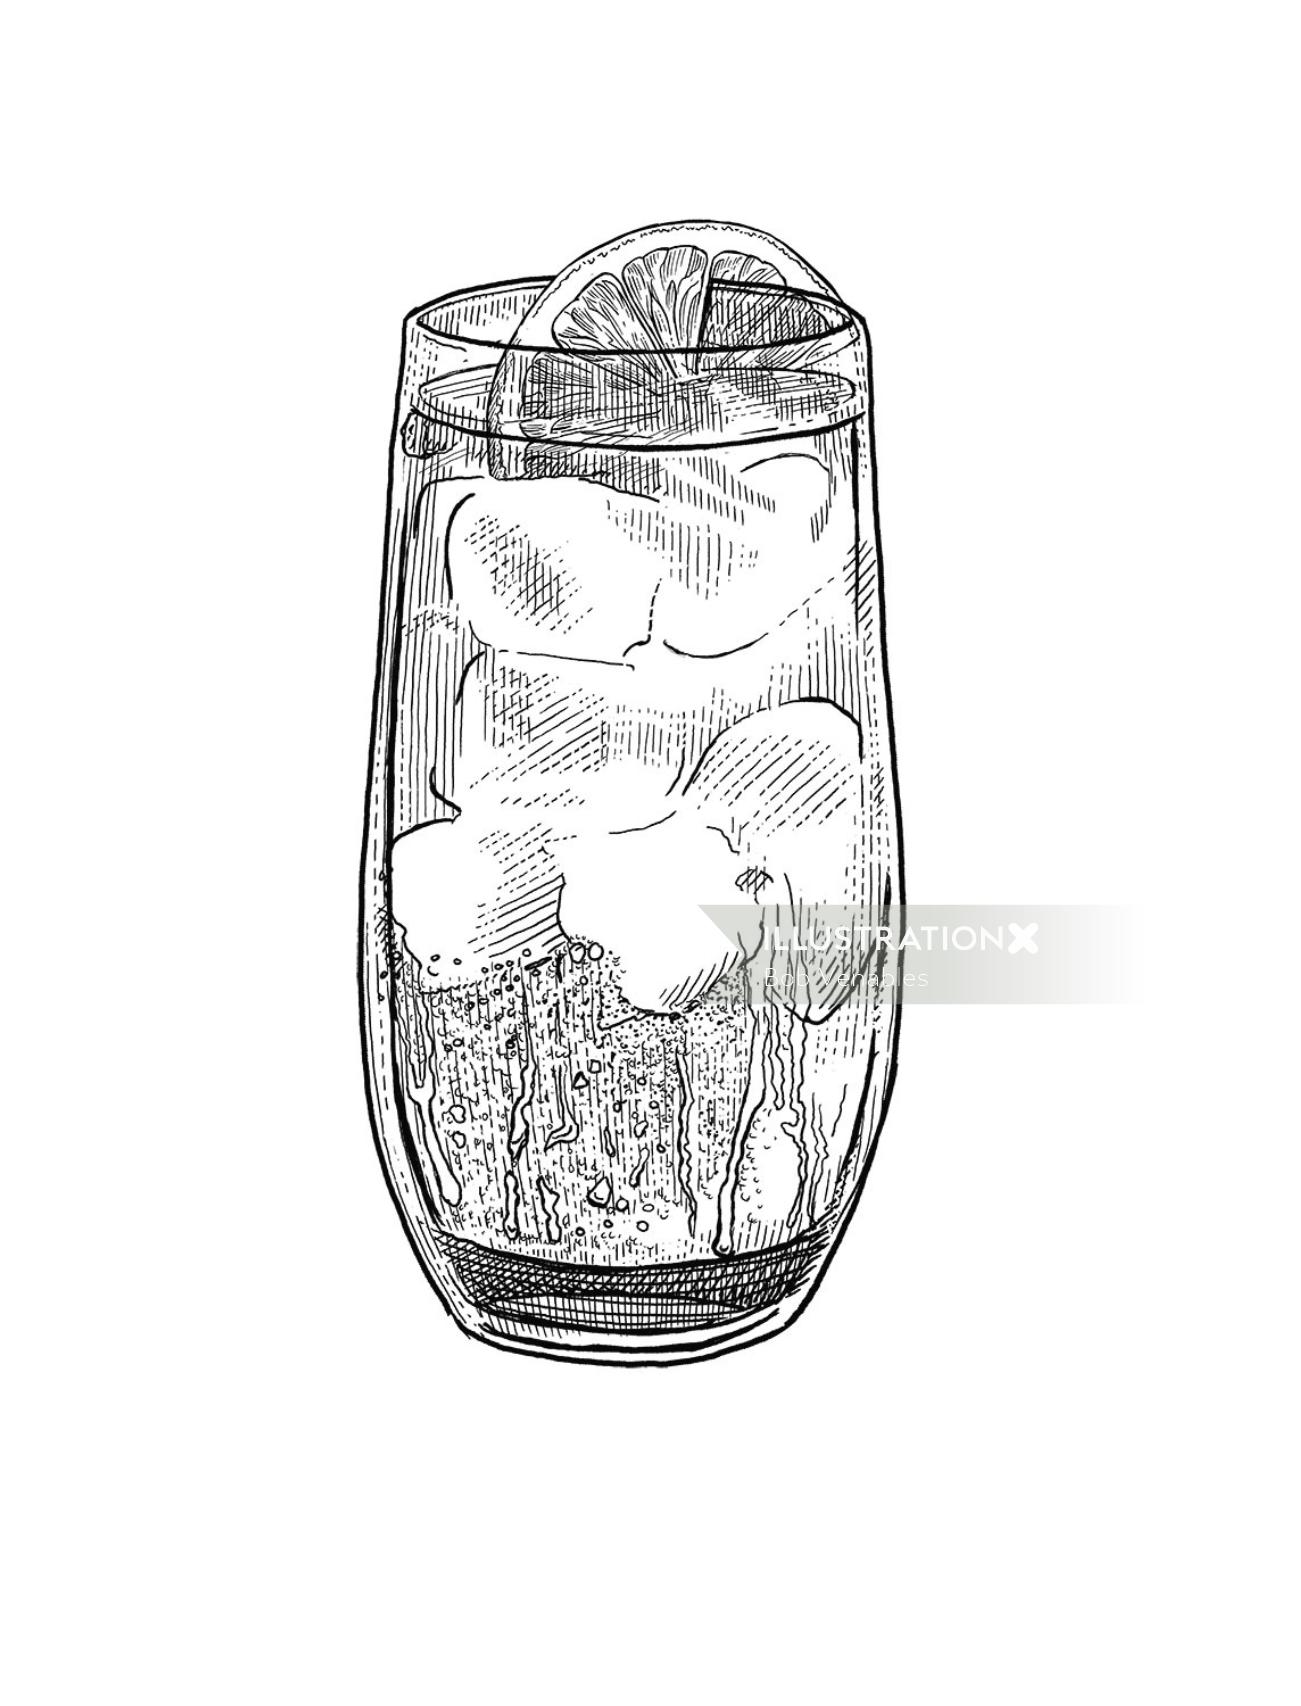 Lemon juice black and white illustration